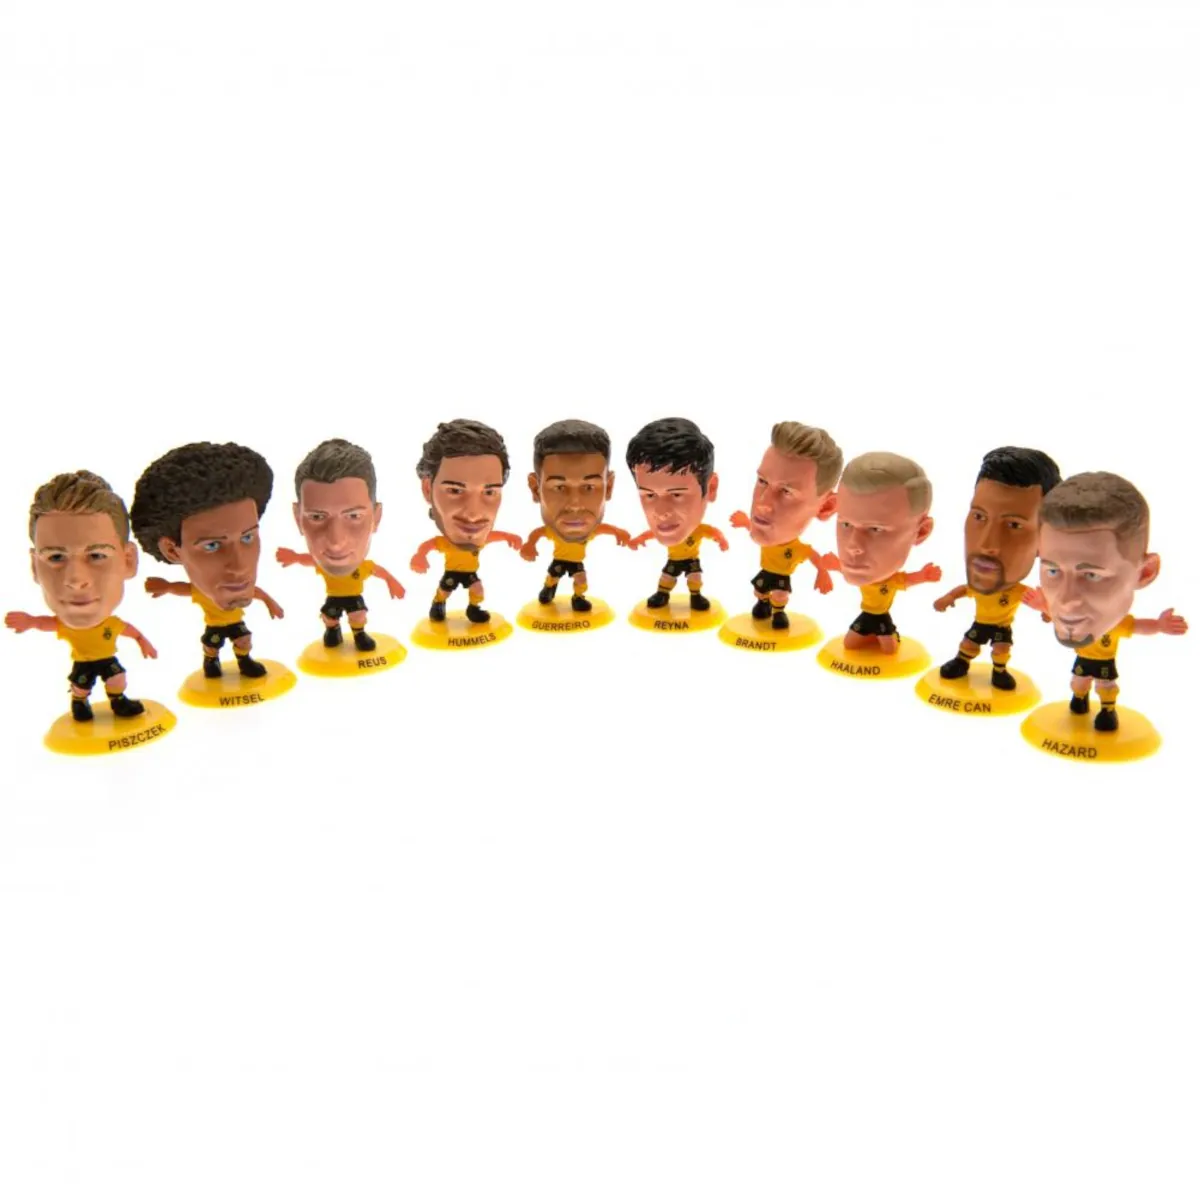 179481 Borussia Dortmund SoccerStarz 10 Player Team Pack Collectable Figures